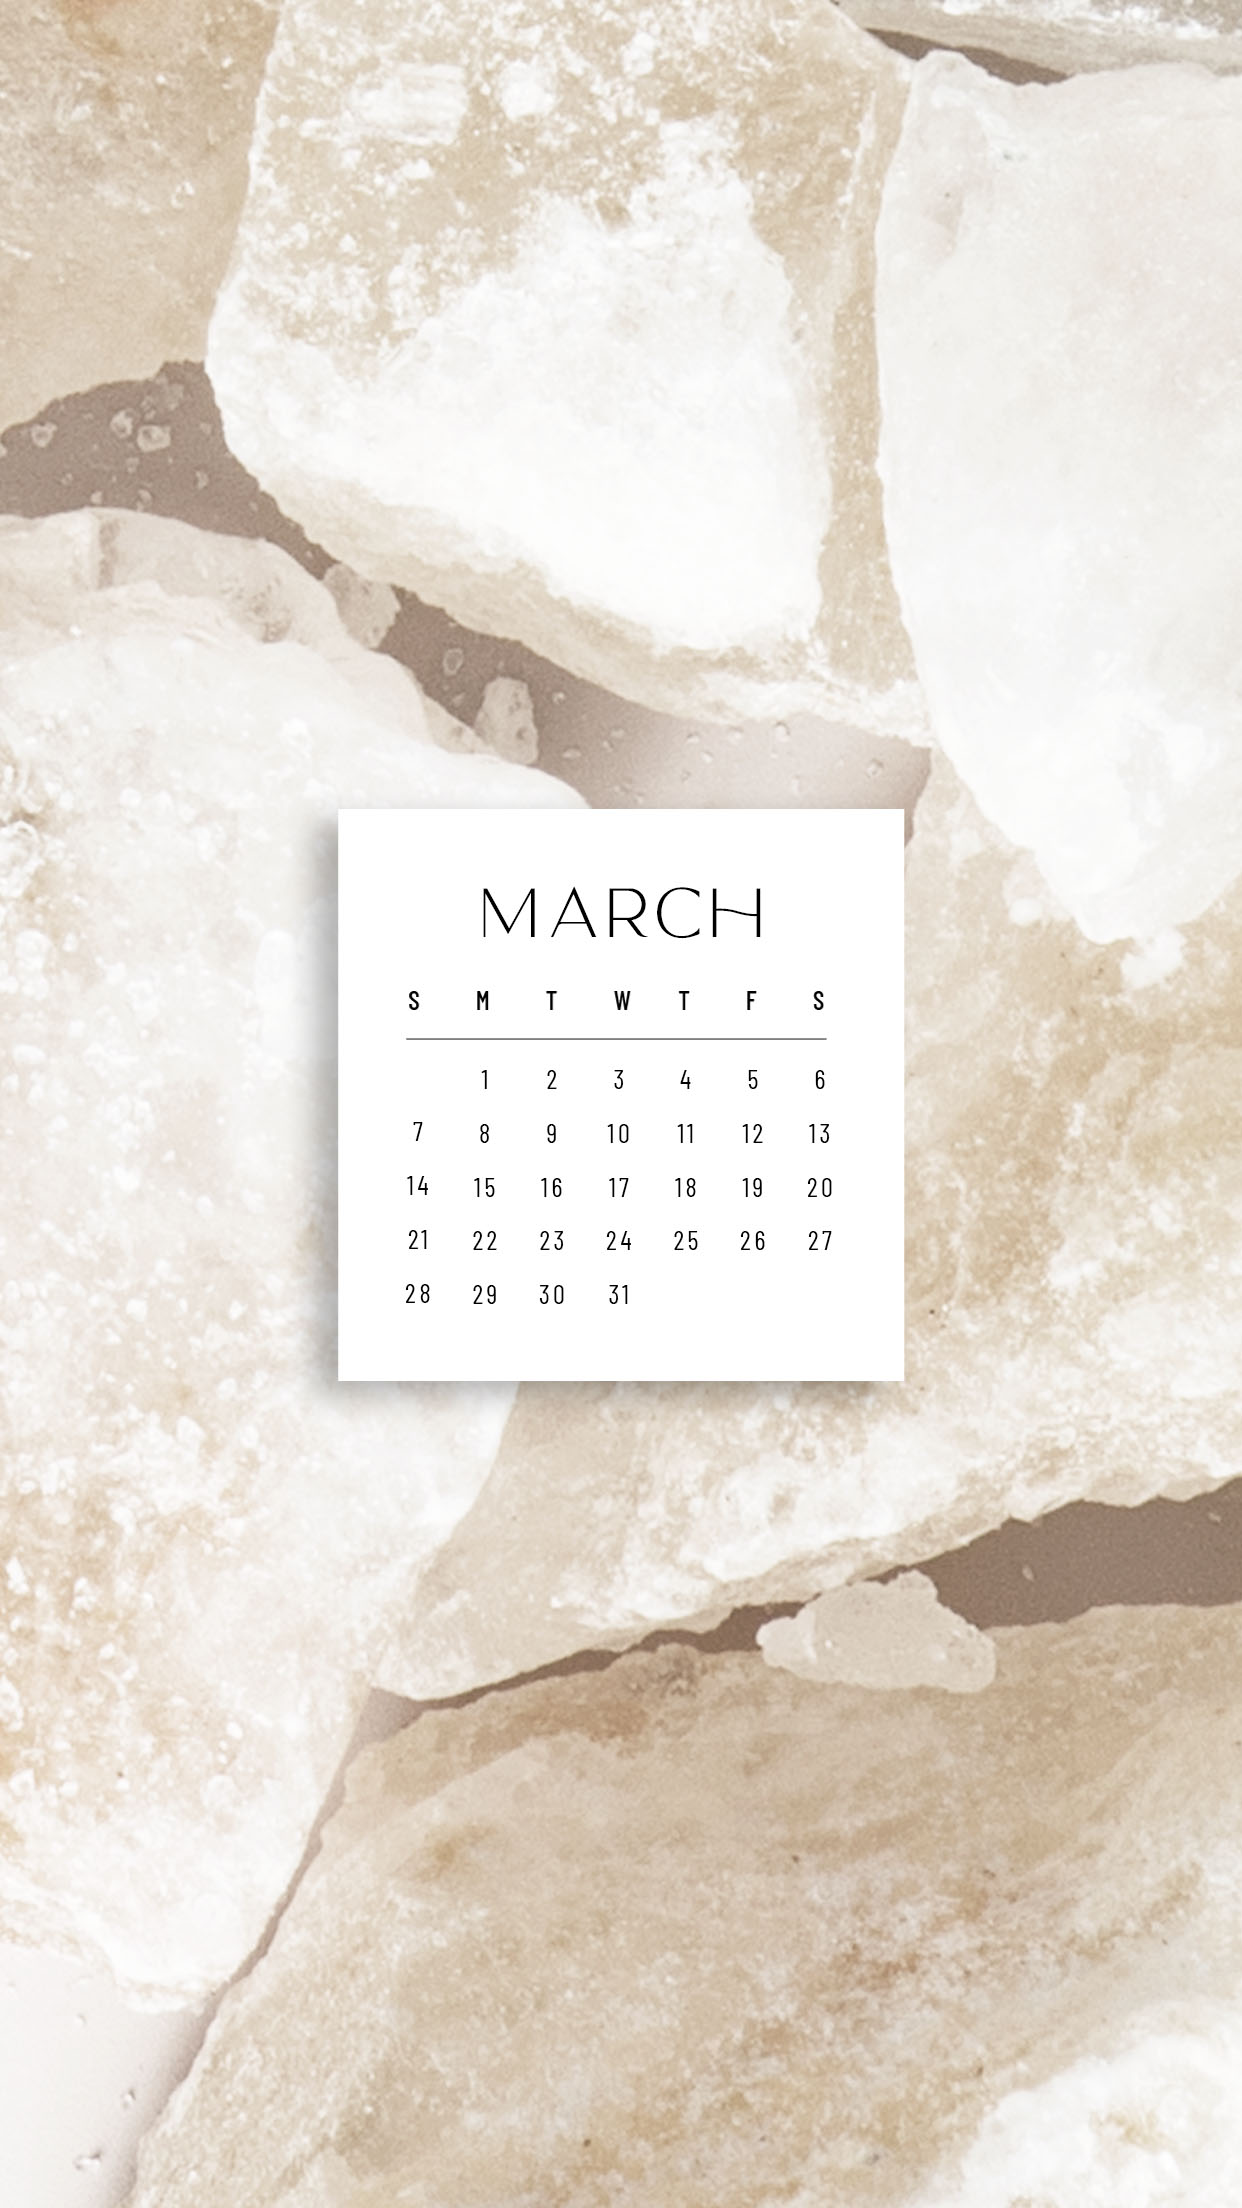 March 2021 Mobile Calendar Wallpaper from Sonrisa Studio